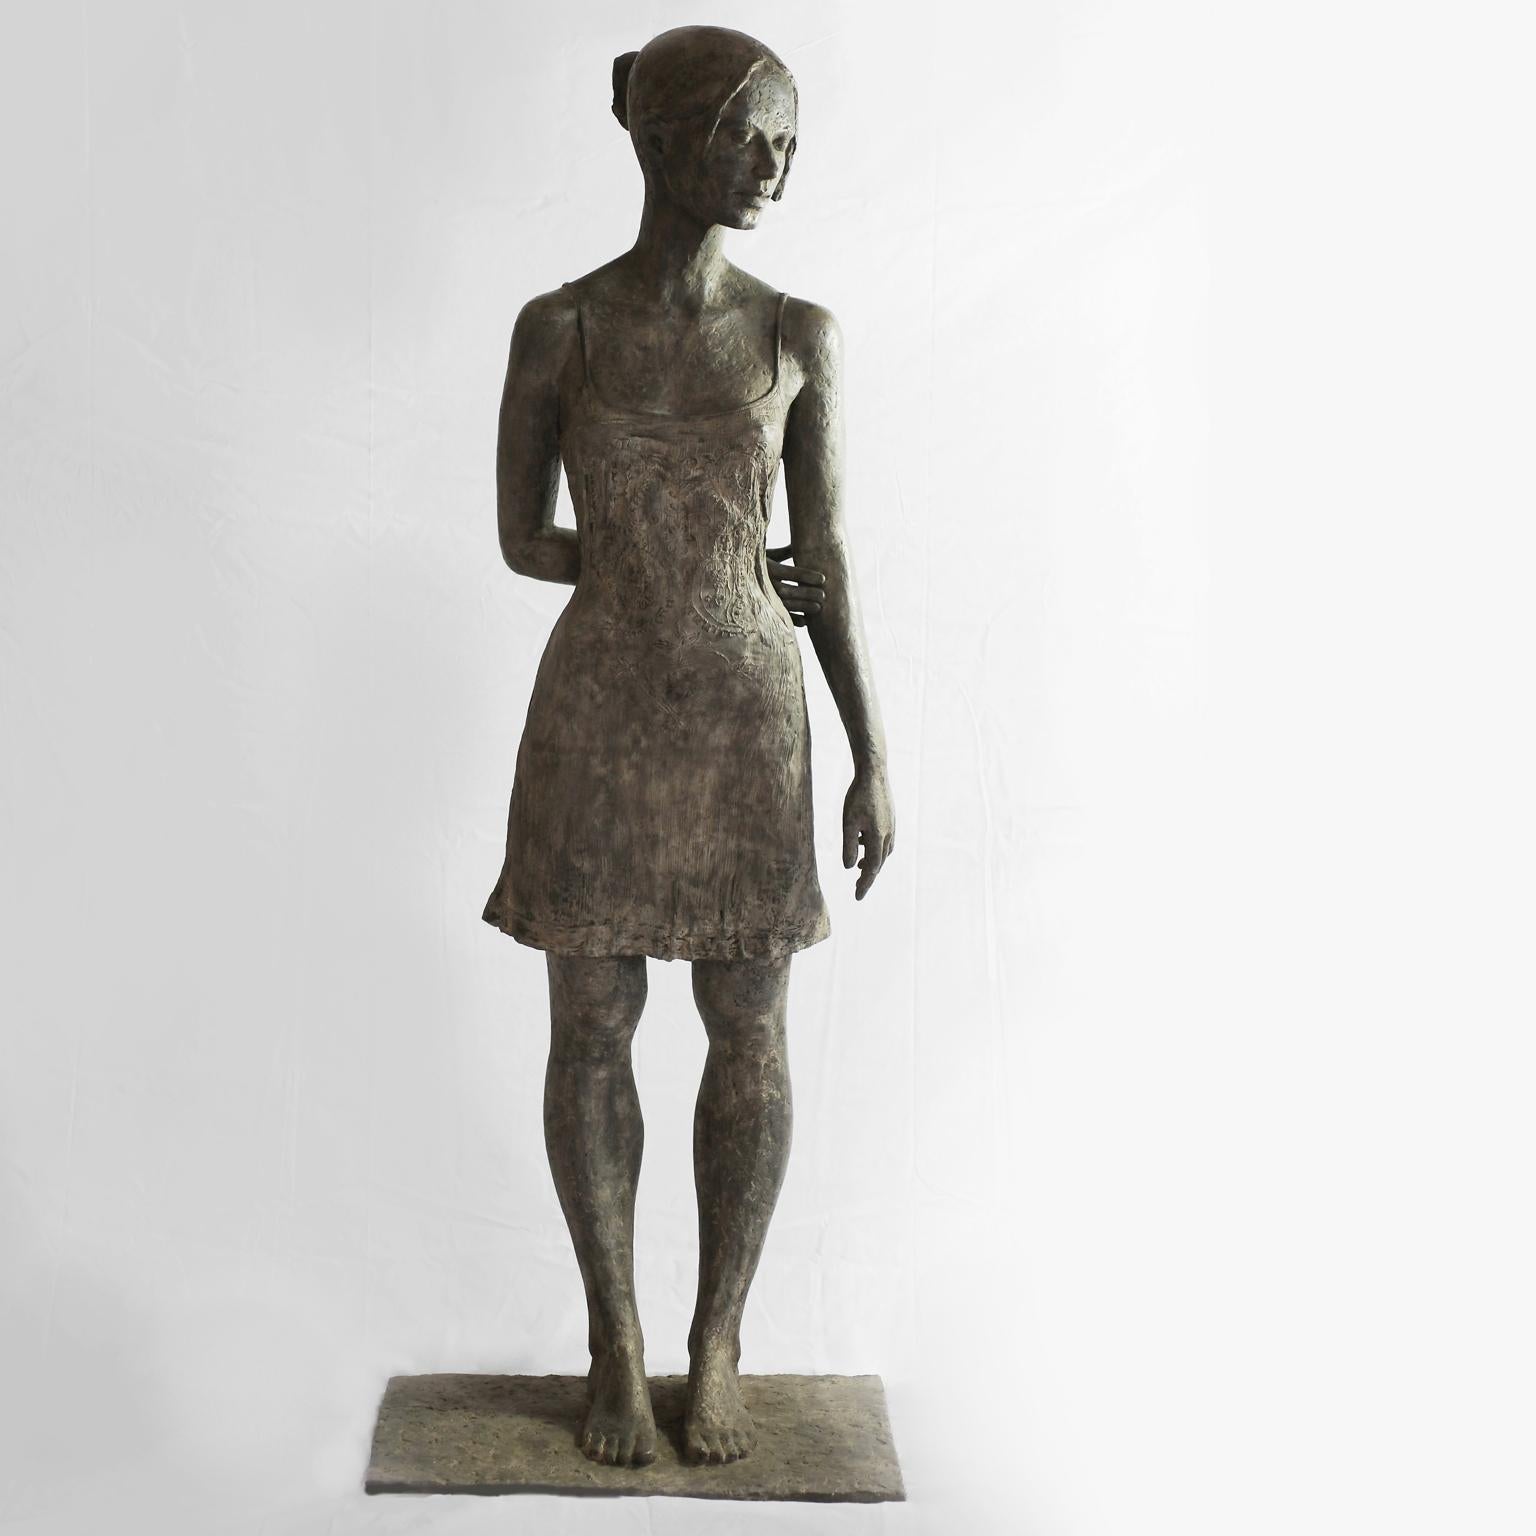 Susanne Kraisser Figurative Sculpture - Summer Coolness (Sommerkälte) life-size contemporary bronze sculpture of female